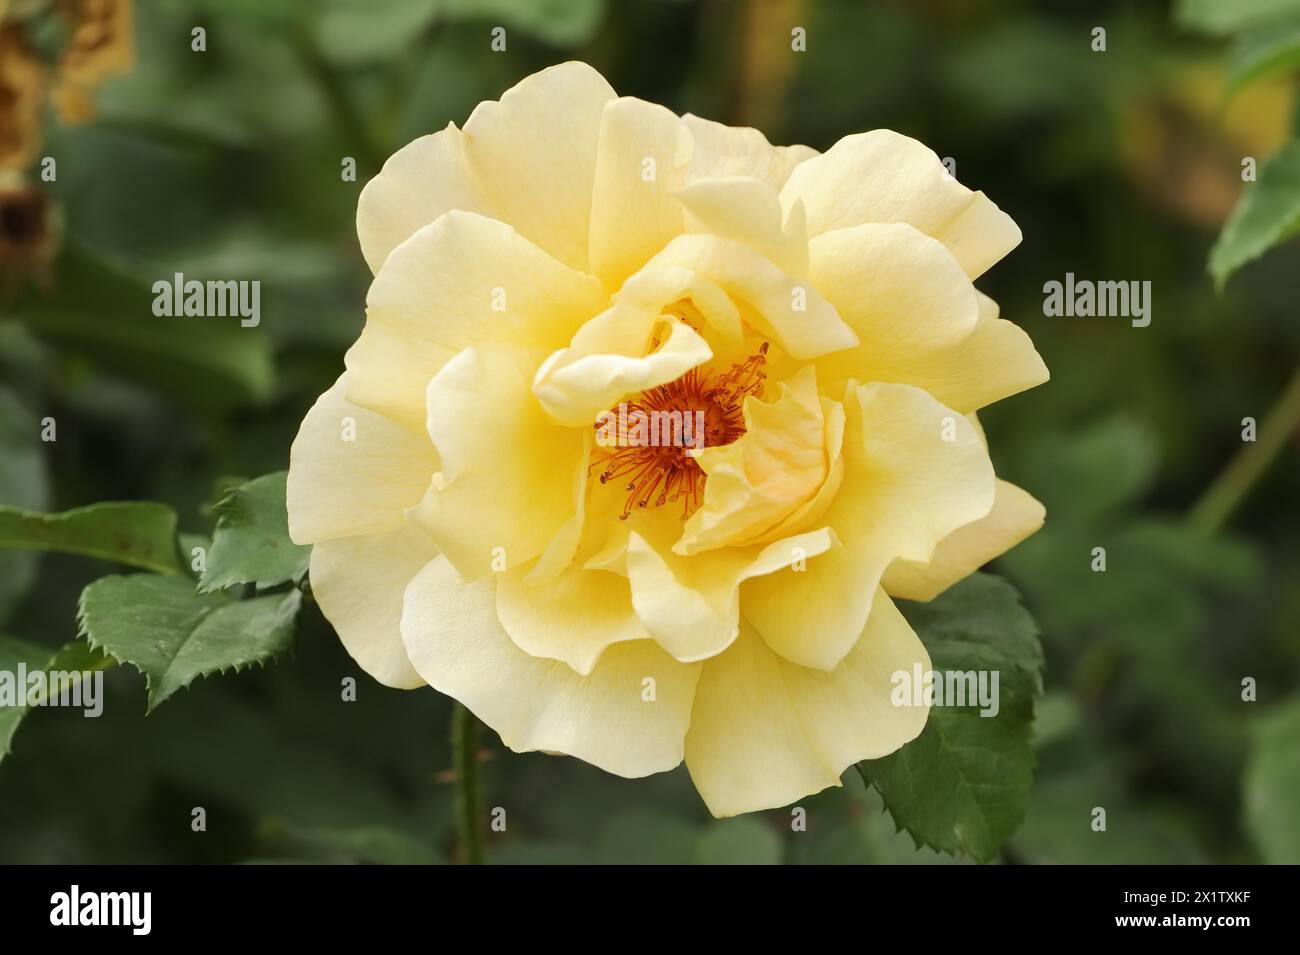 Garden rose or rose (Rosa hybrida), flower, ornamental plant, North Rhine-Westphalia, Germany Stock Photo